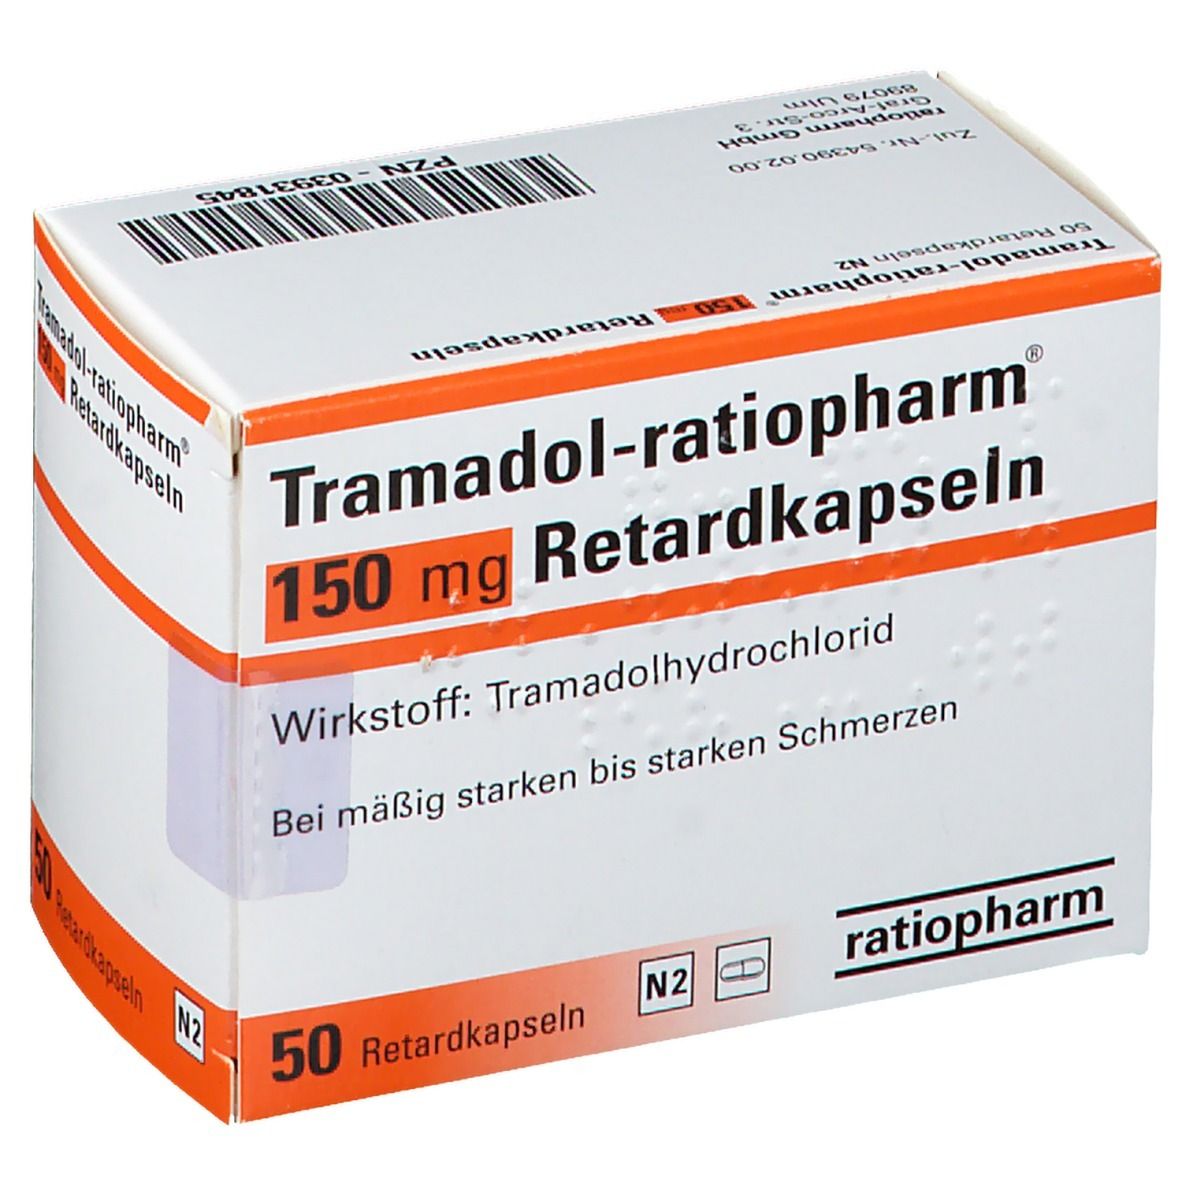 Tramadol-ratiopharm® 150 mg